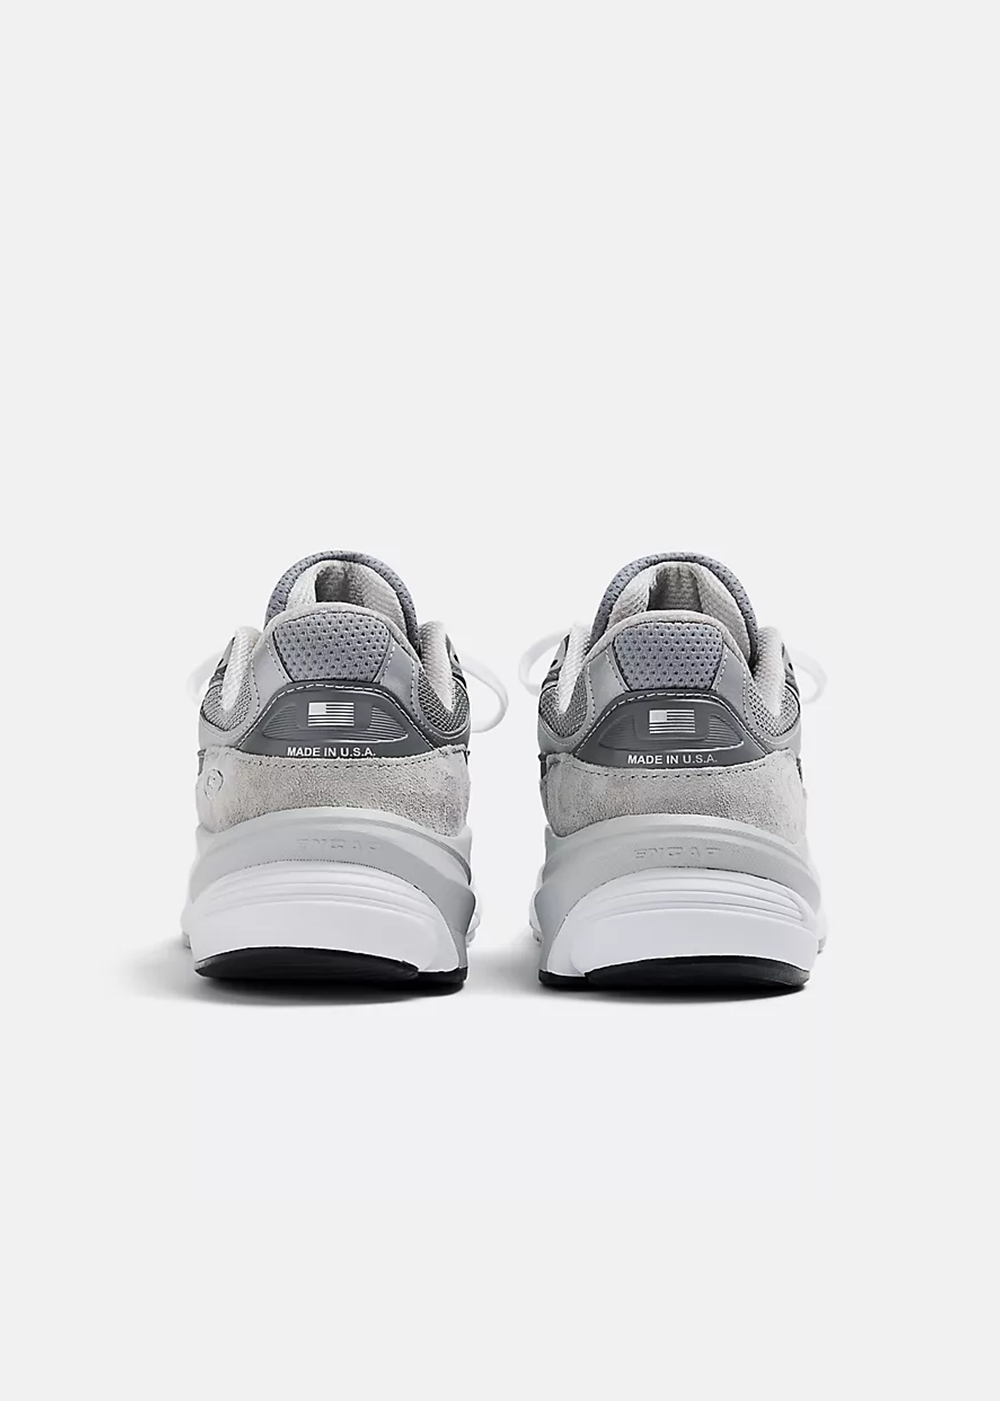 Women's 990V6 Sneakers - Grey - New Balance Canada - Danali